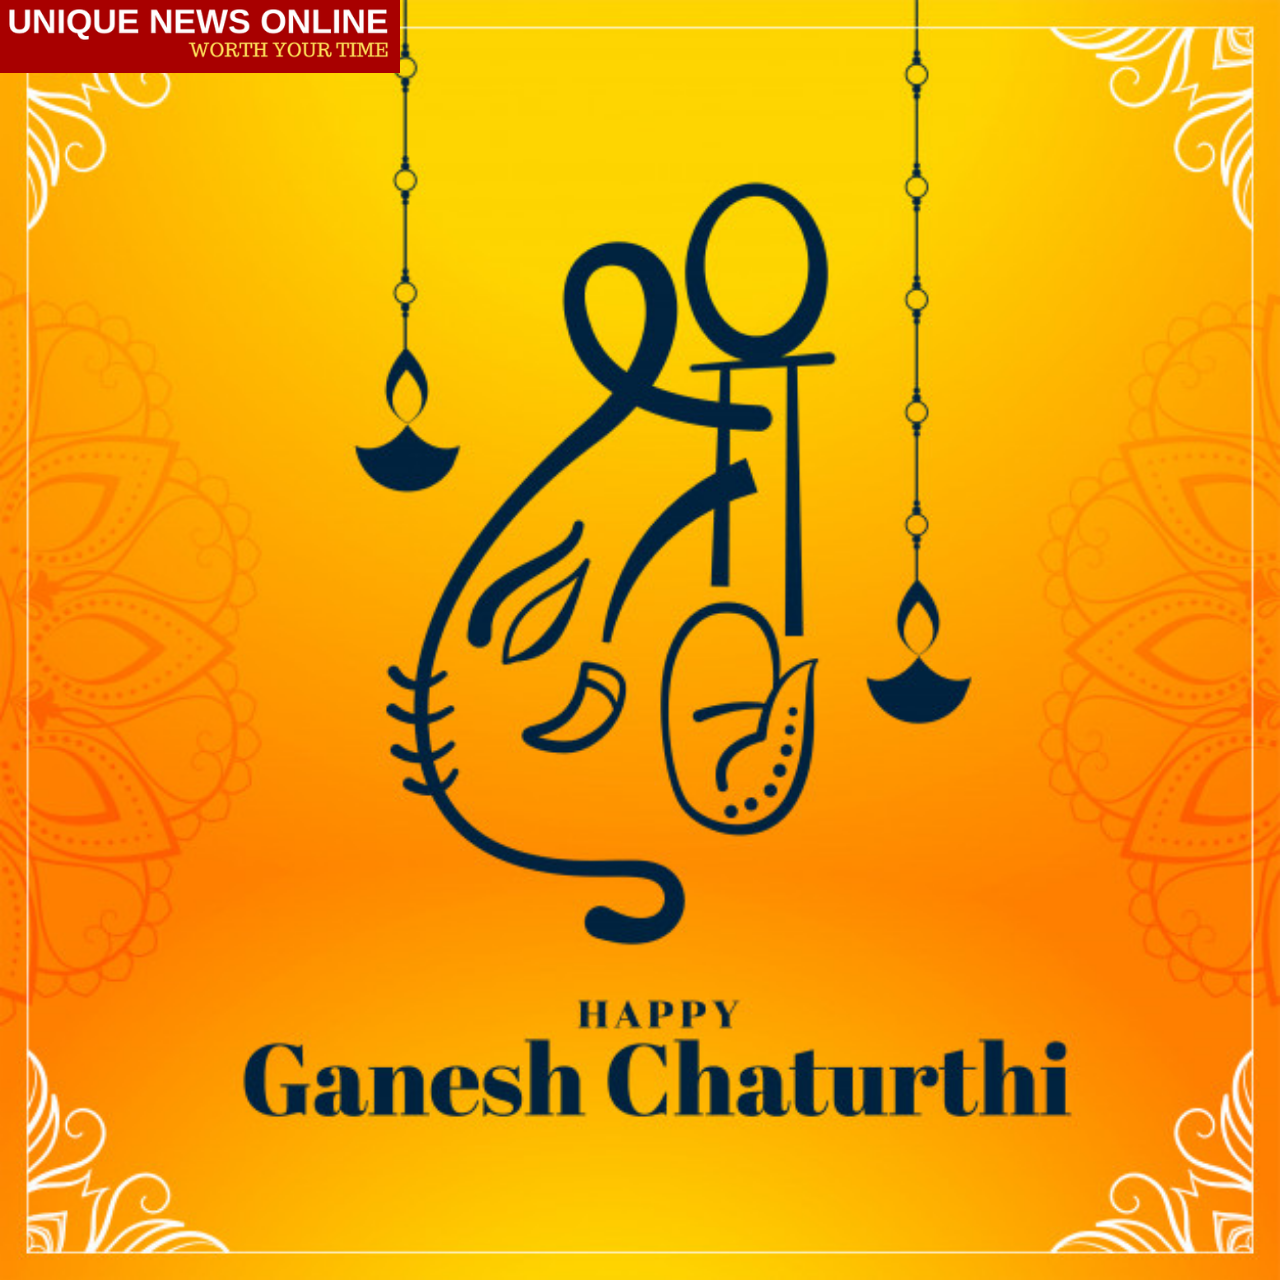 Happy Ganesh Chaturthi 2020 Vinayak Chaturthi Wishes Images Status Quotes Photos Messages 3712